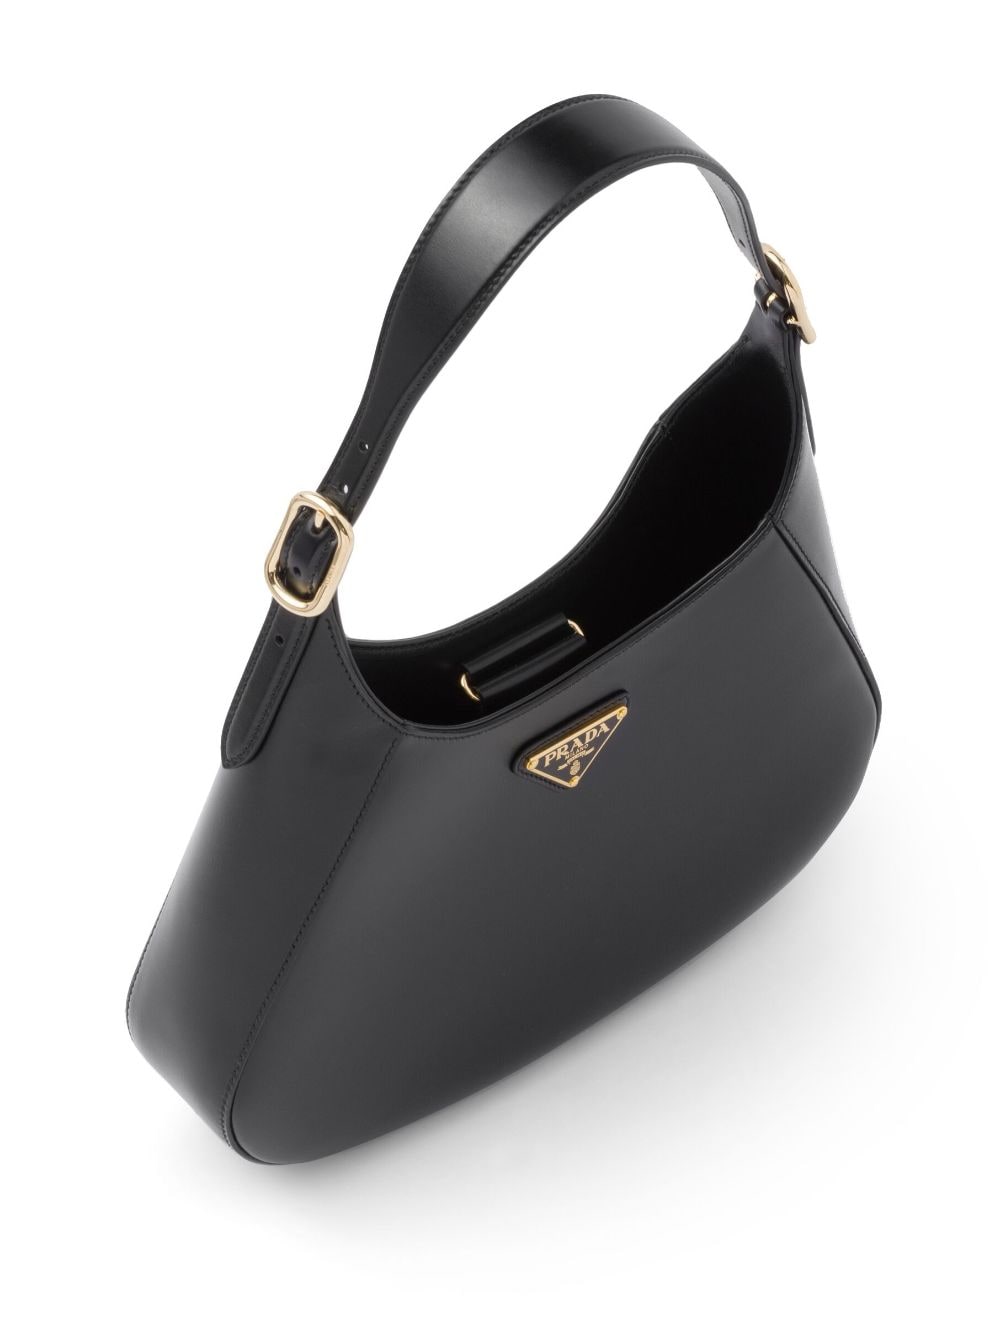 Prada Cleo brushed leather shoulder bag with flap White 3D model